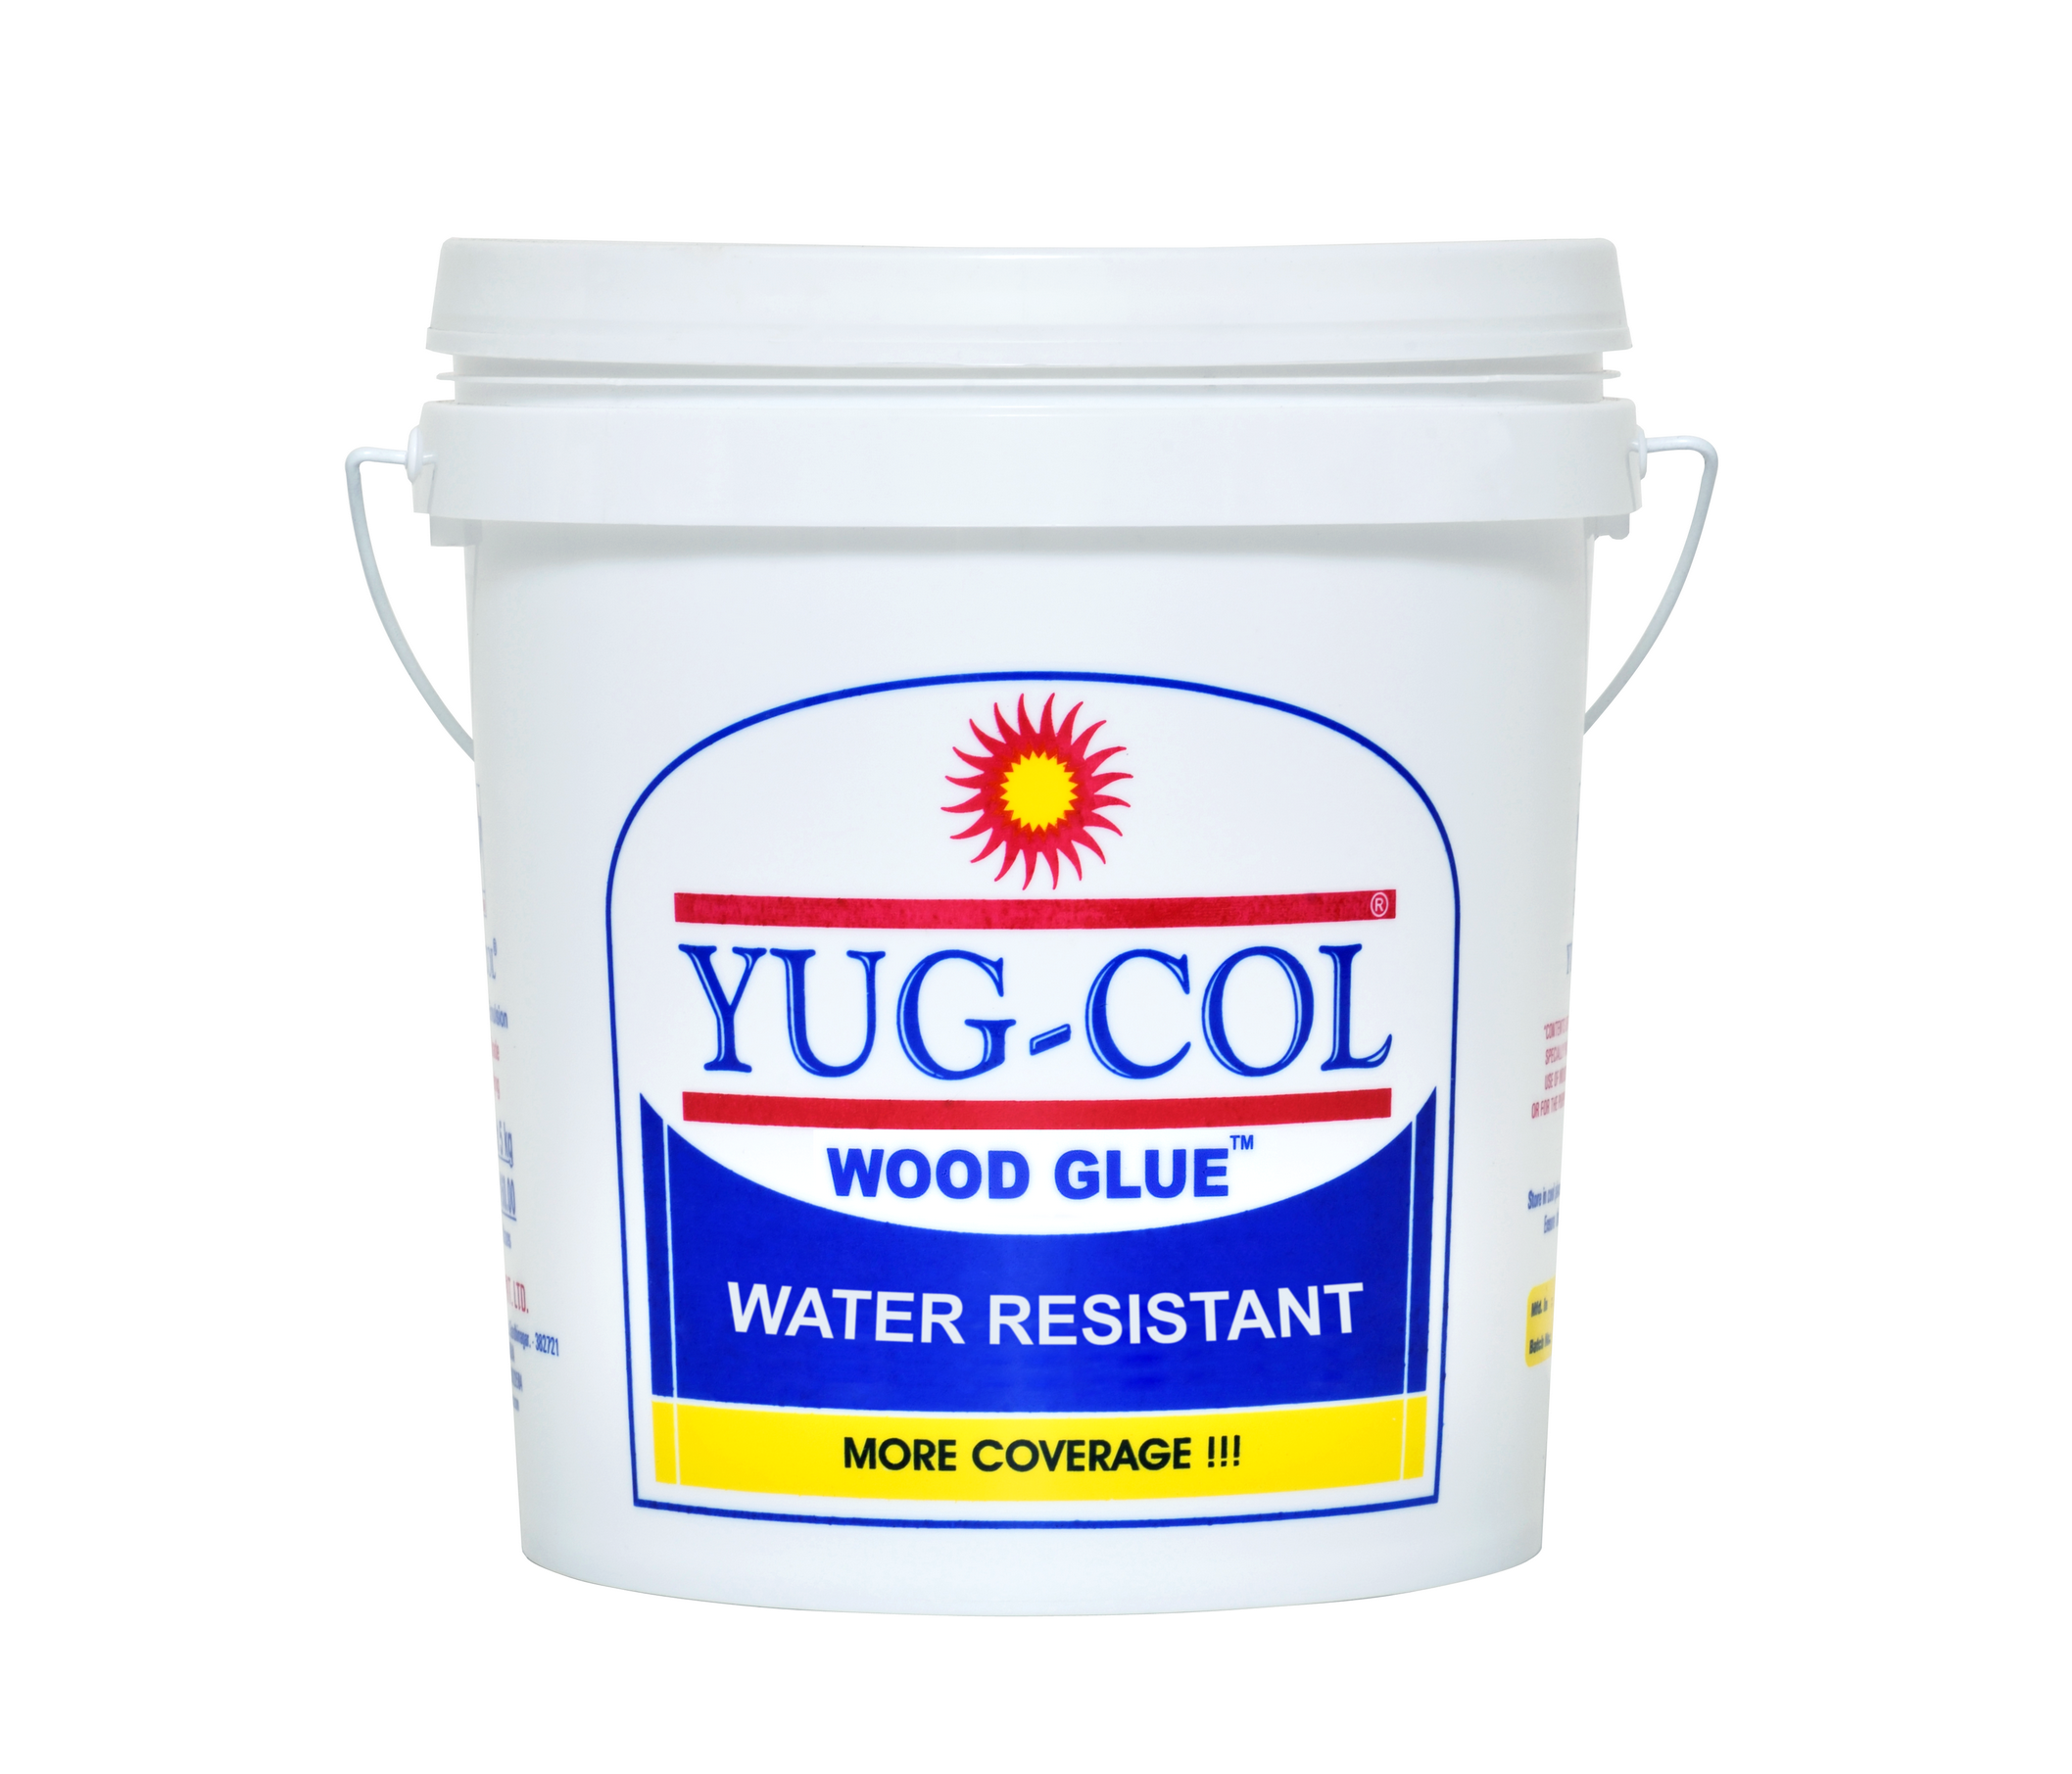 YUG-COL WATER RESISTANT - www.yugdecor.com